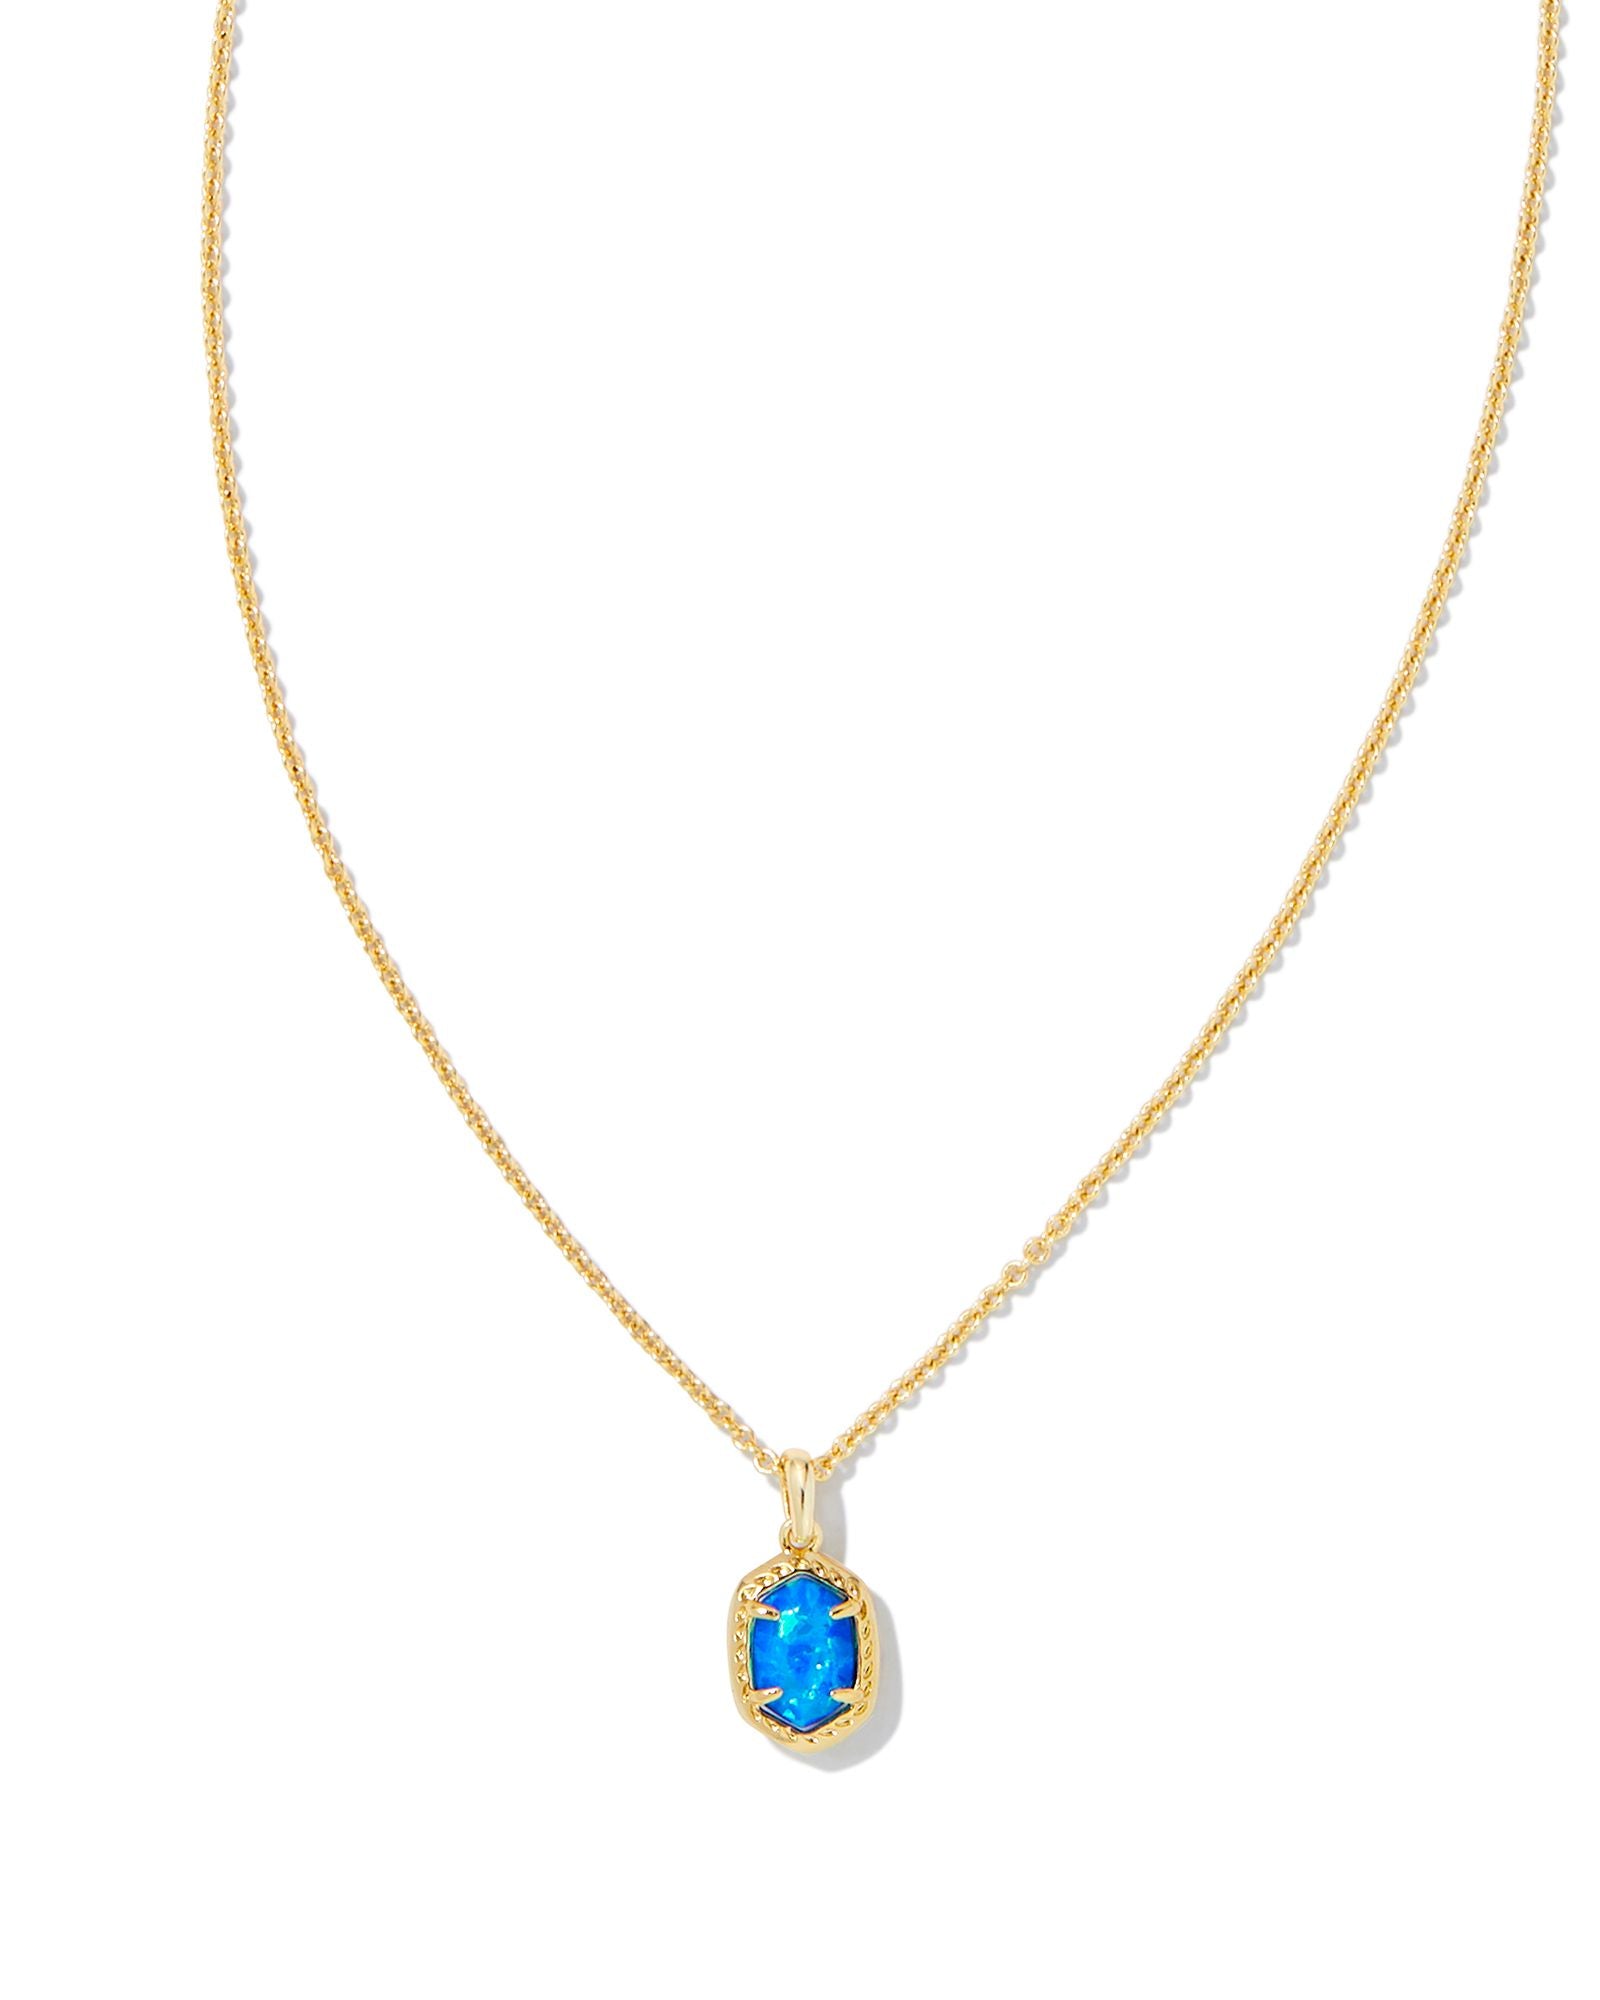 Kendra Scott Daphne Gold & Bright Blue Opal Framed Pendant Necklace